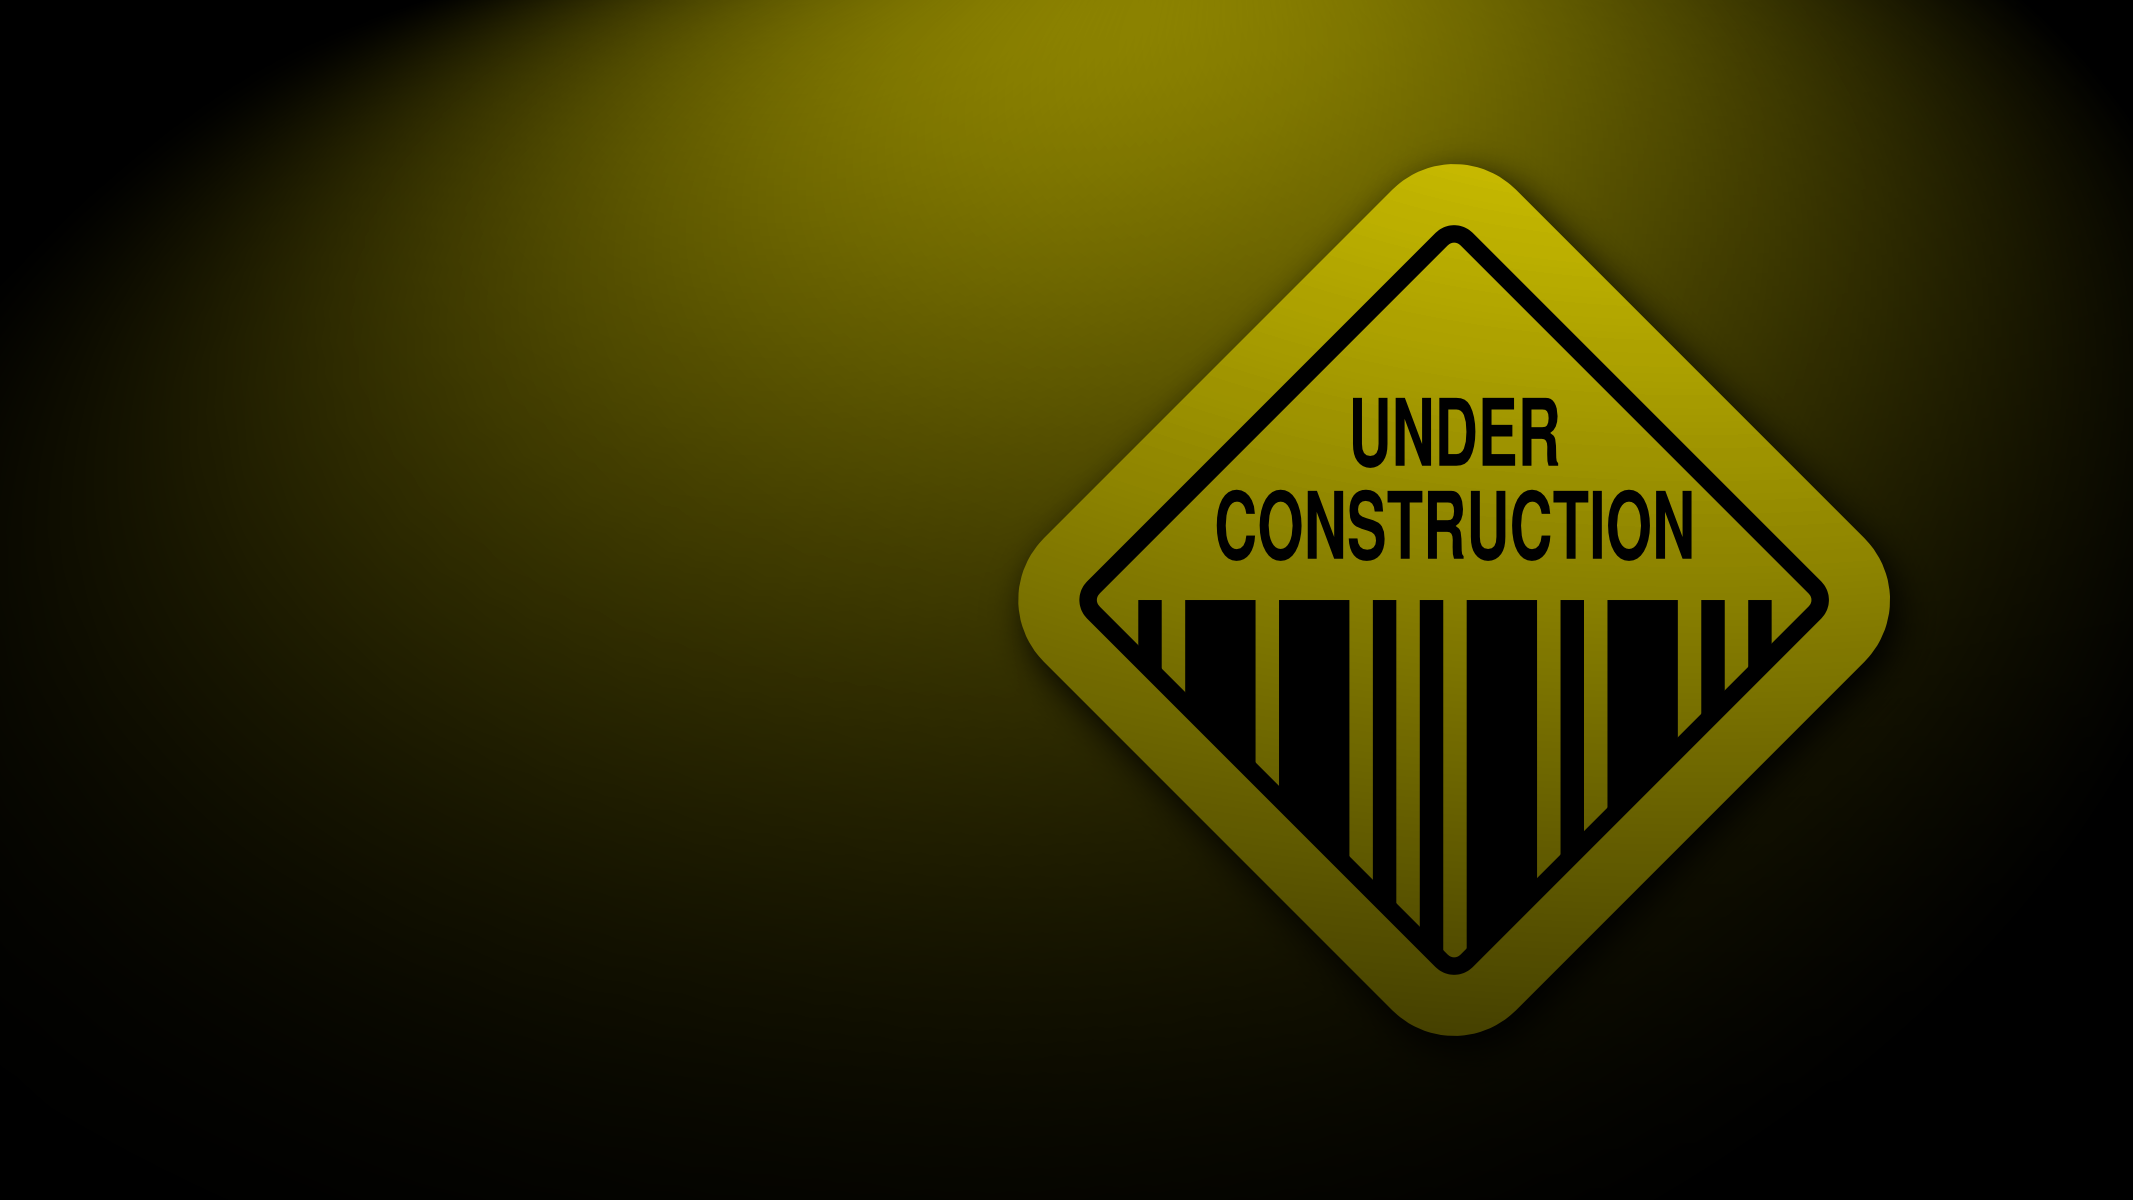 Under Construction Logo - Wikidata logo under construction sign wallpaper.png